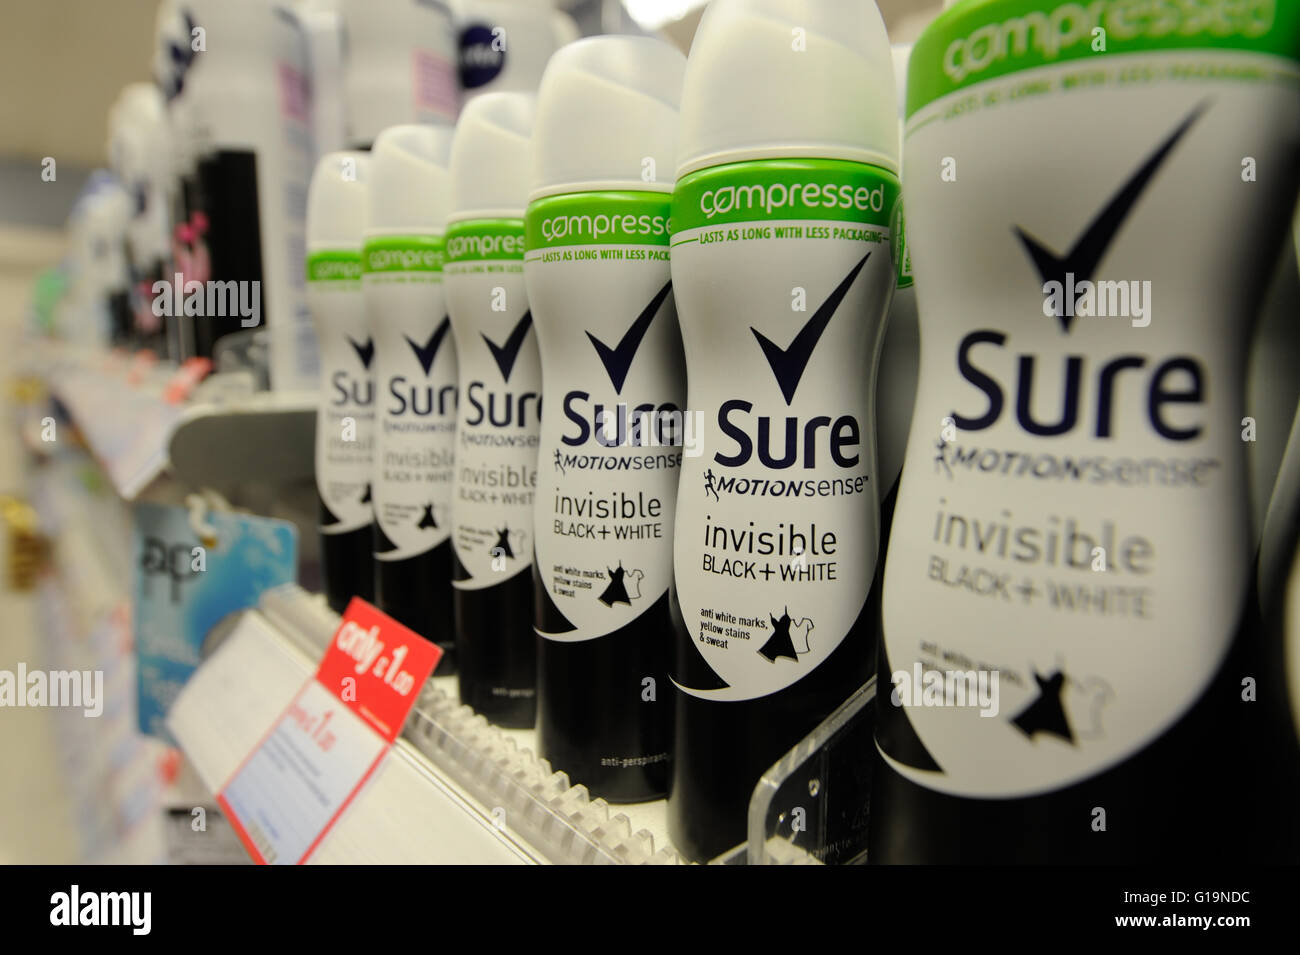 Sure Deodorant on display in Boots Chemist Stock Photo - Alamy